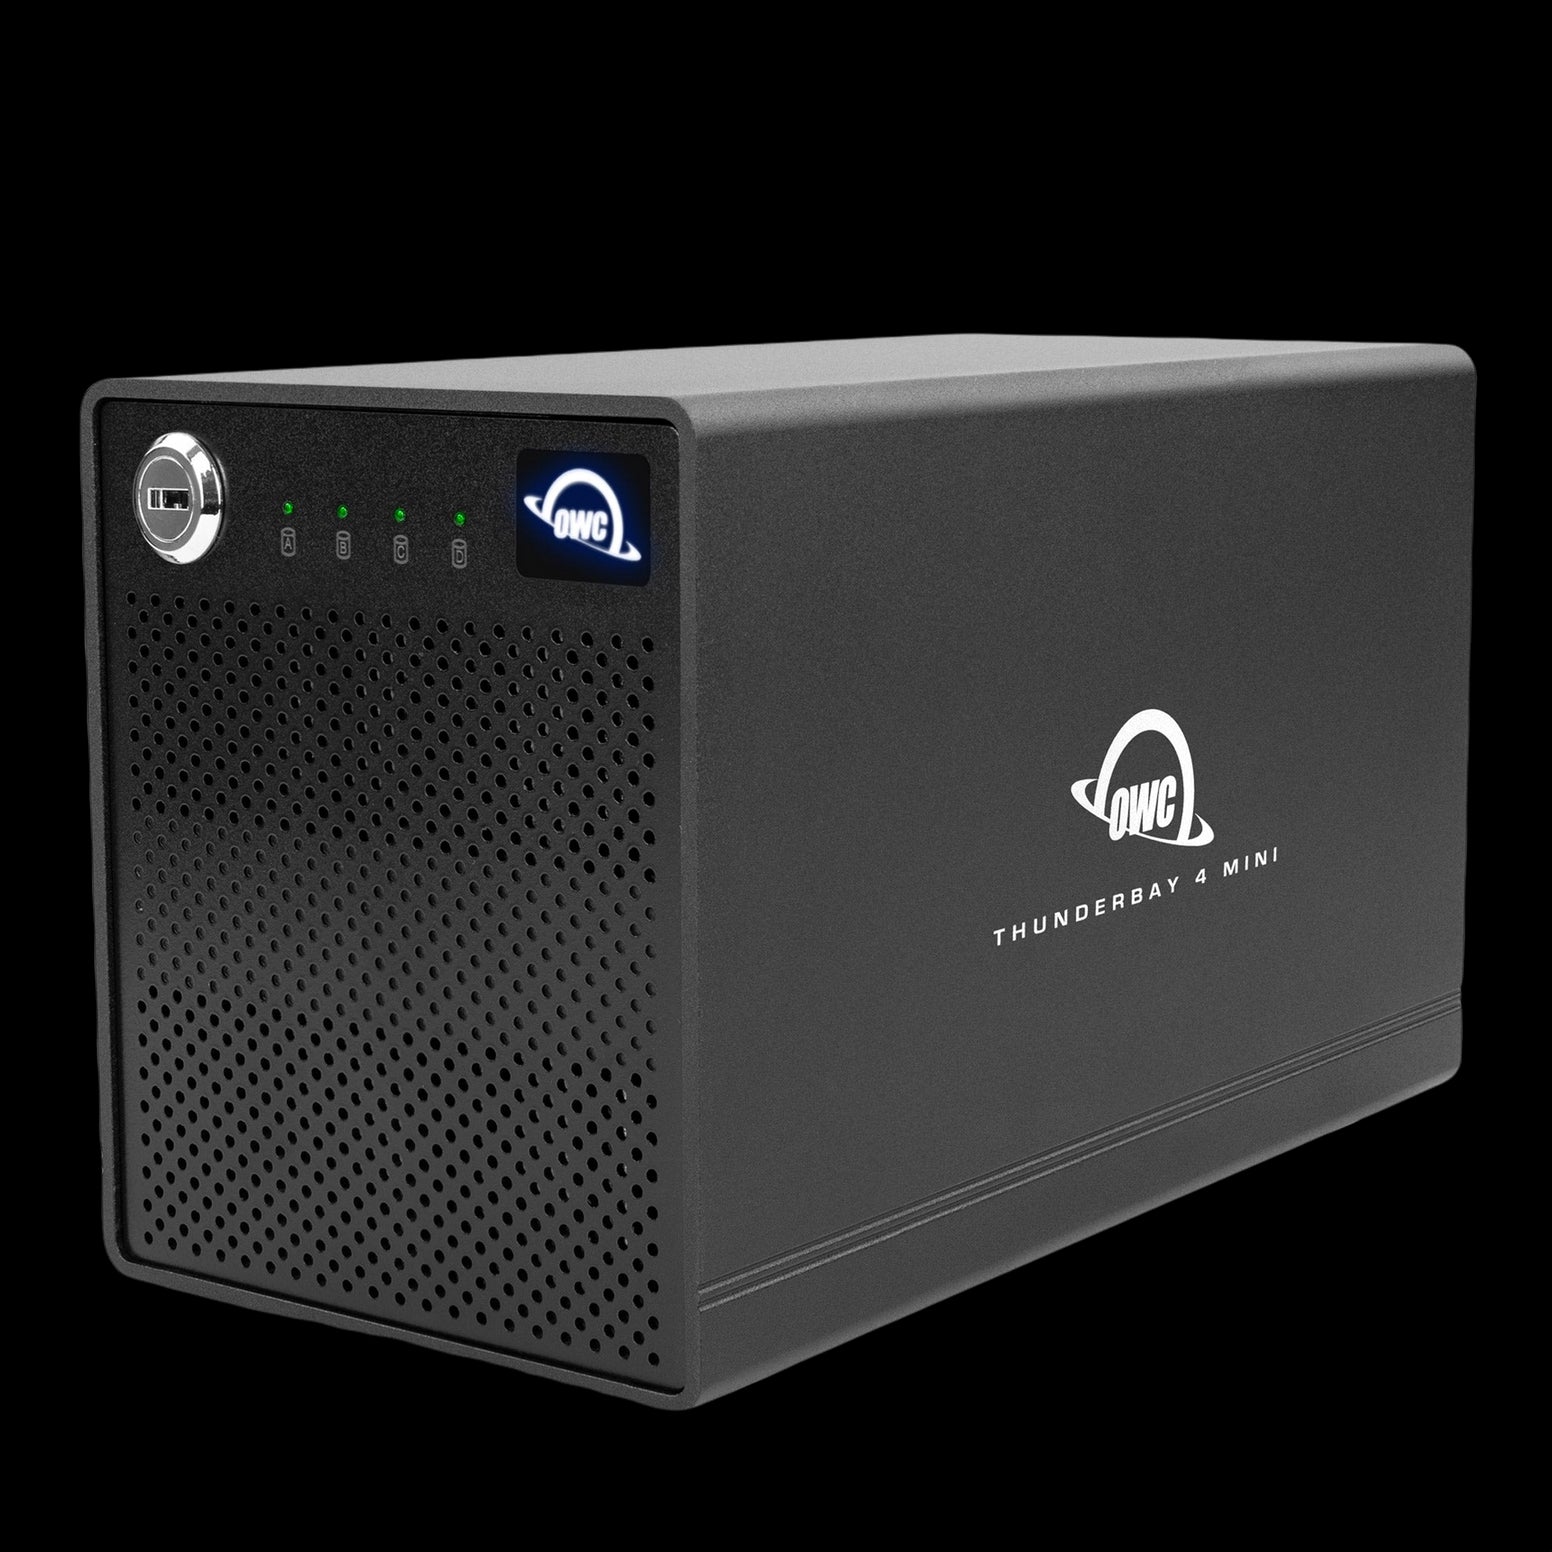 OWC 4TB ThunderBay 4 mini 4-Drive SSD Thunderbolt 3 RAID 5 Array